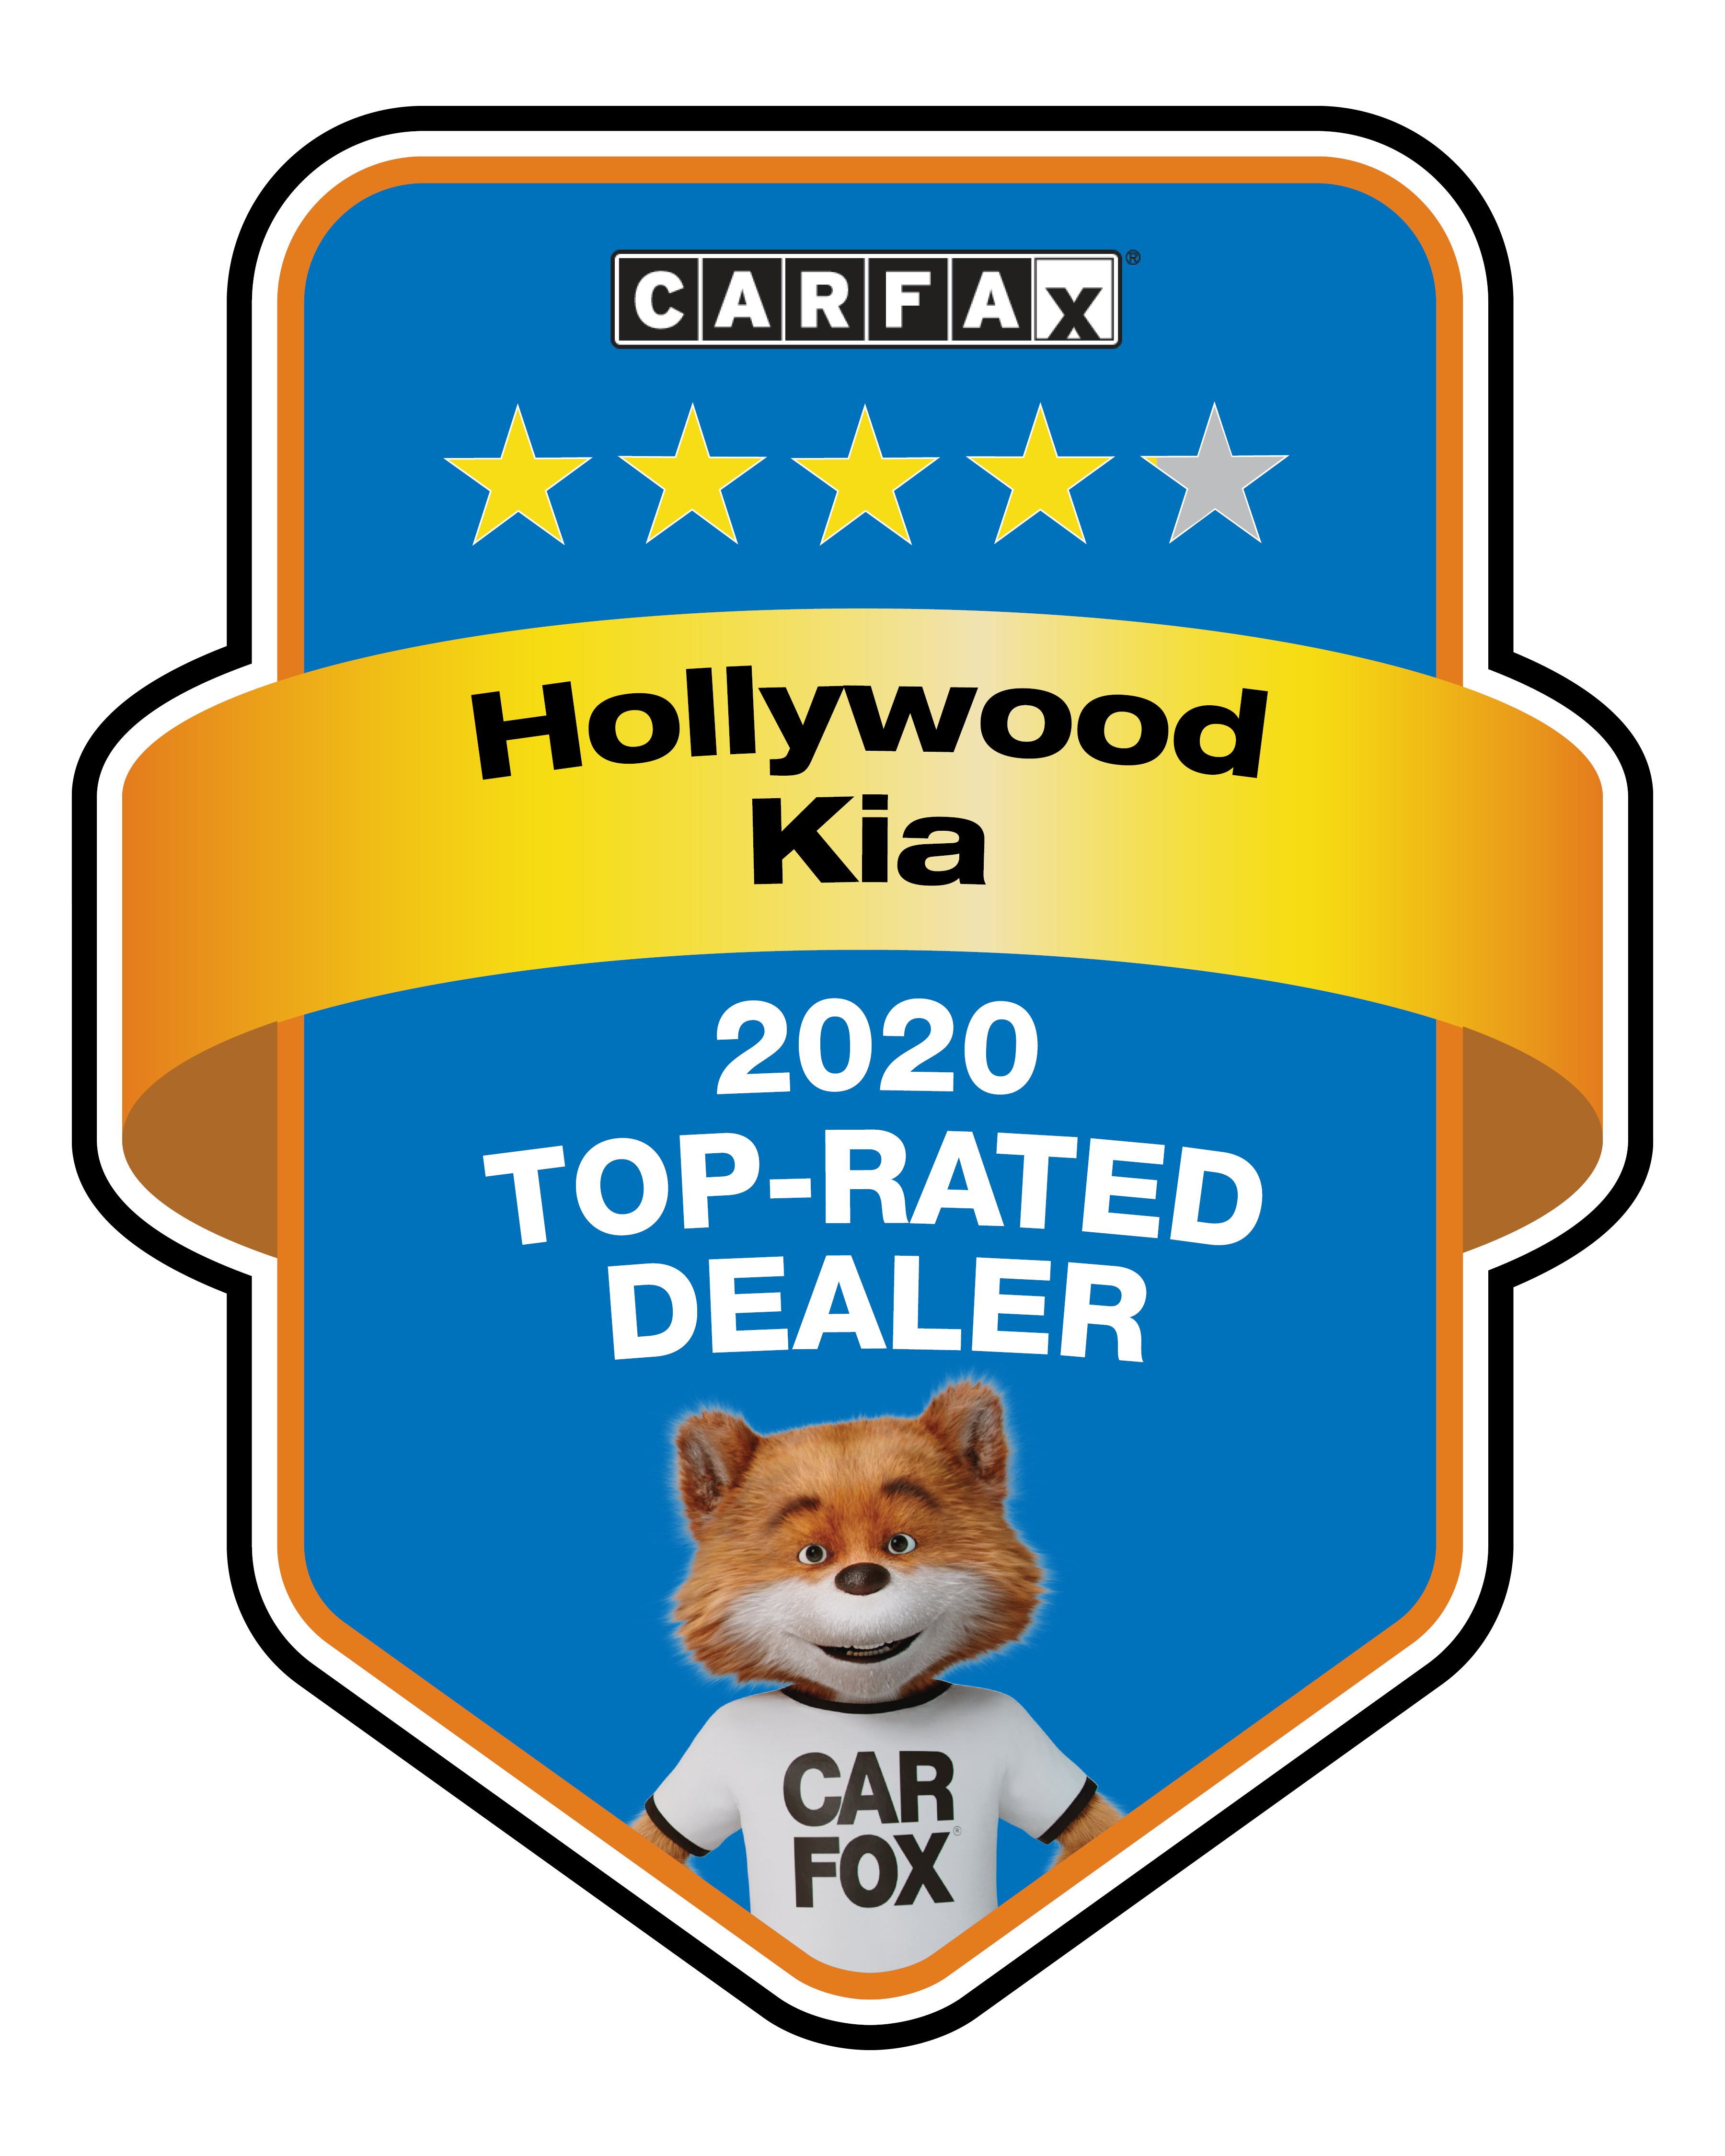 Hollywood Kia named CARFAX Top-Rated Dealer